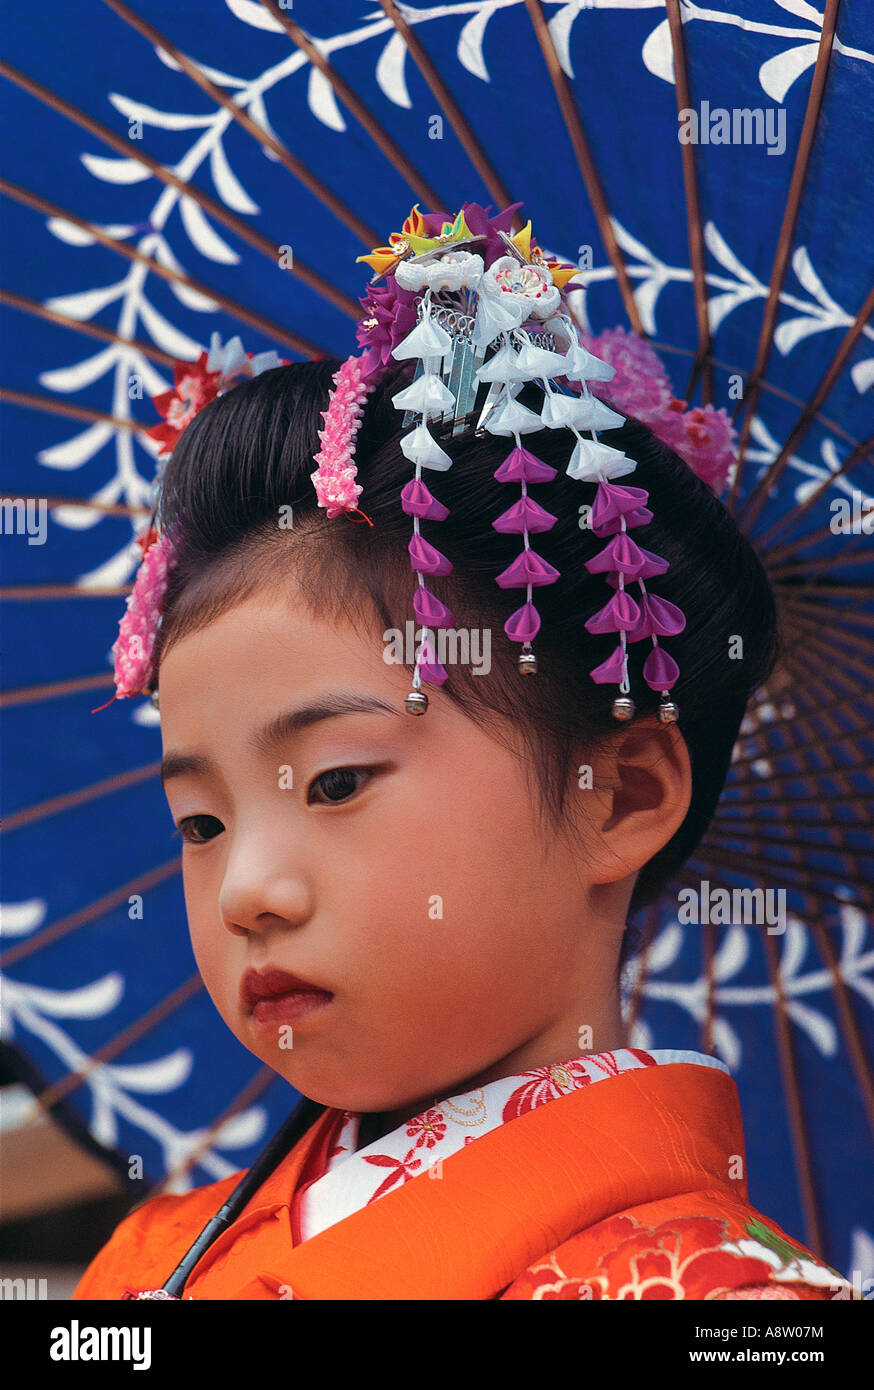 Japan. Tokyo. Outdoor portrait of child girl wearing festival headdress. Stock Photo